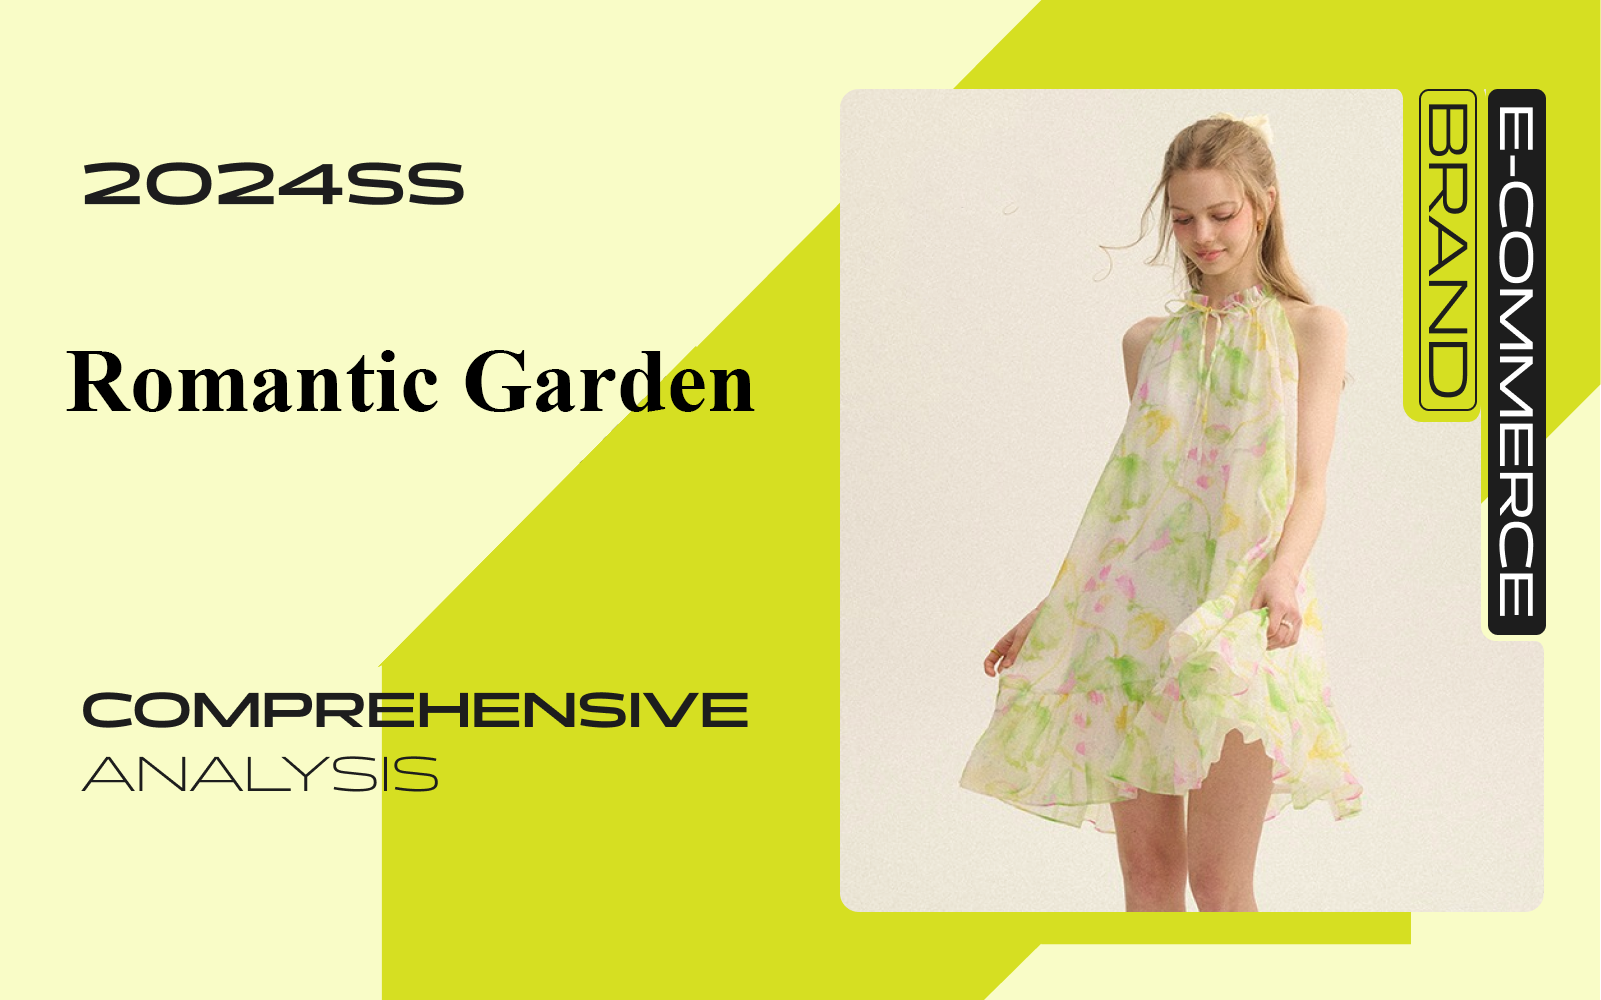 Romantic Garden -- The Popular Style of Womenswear E-Commerce Brand